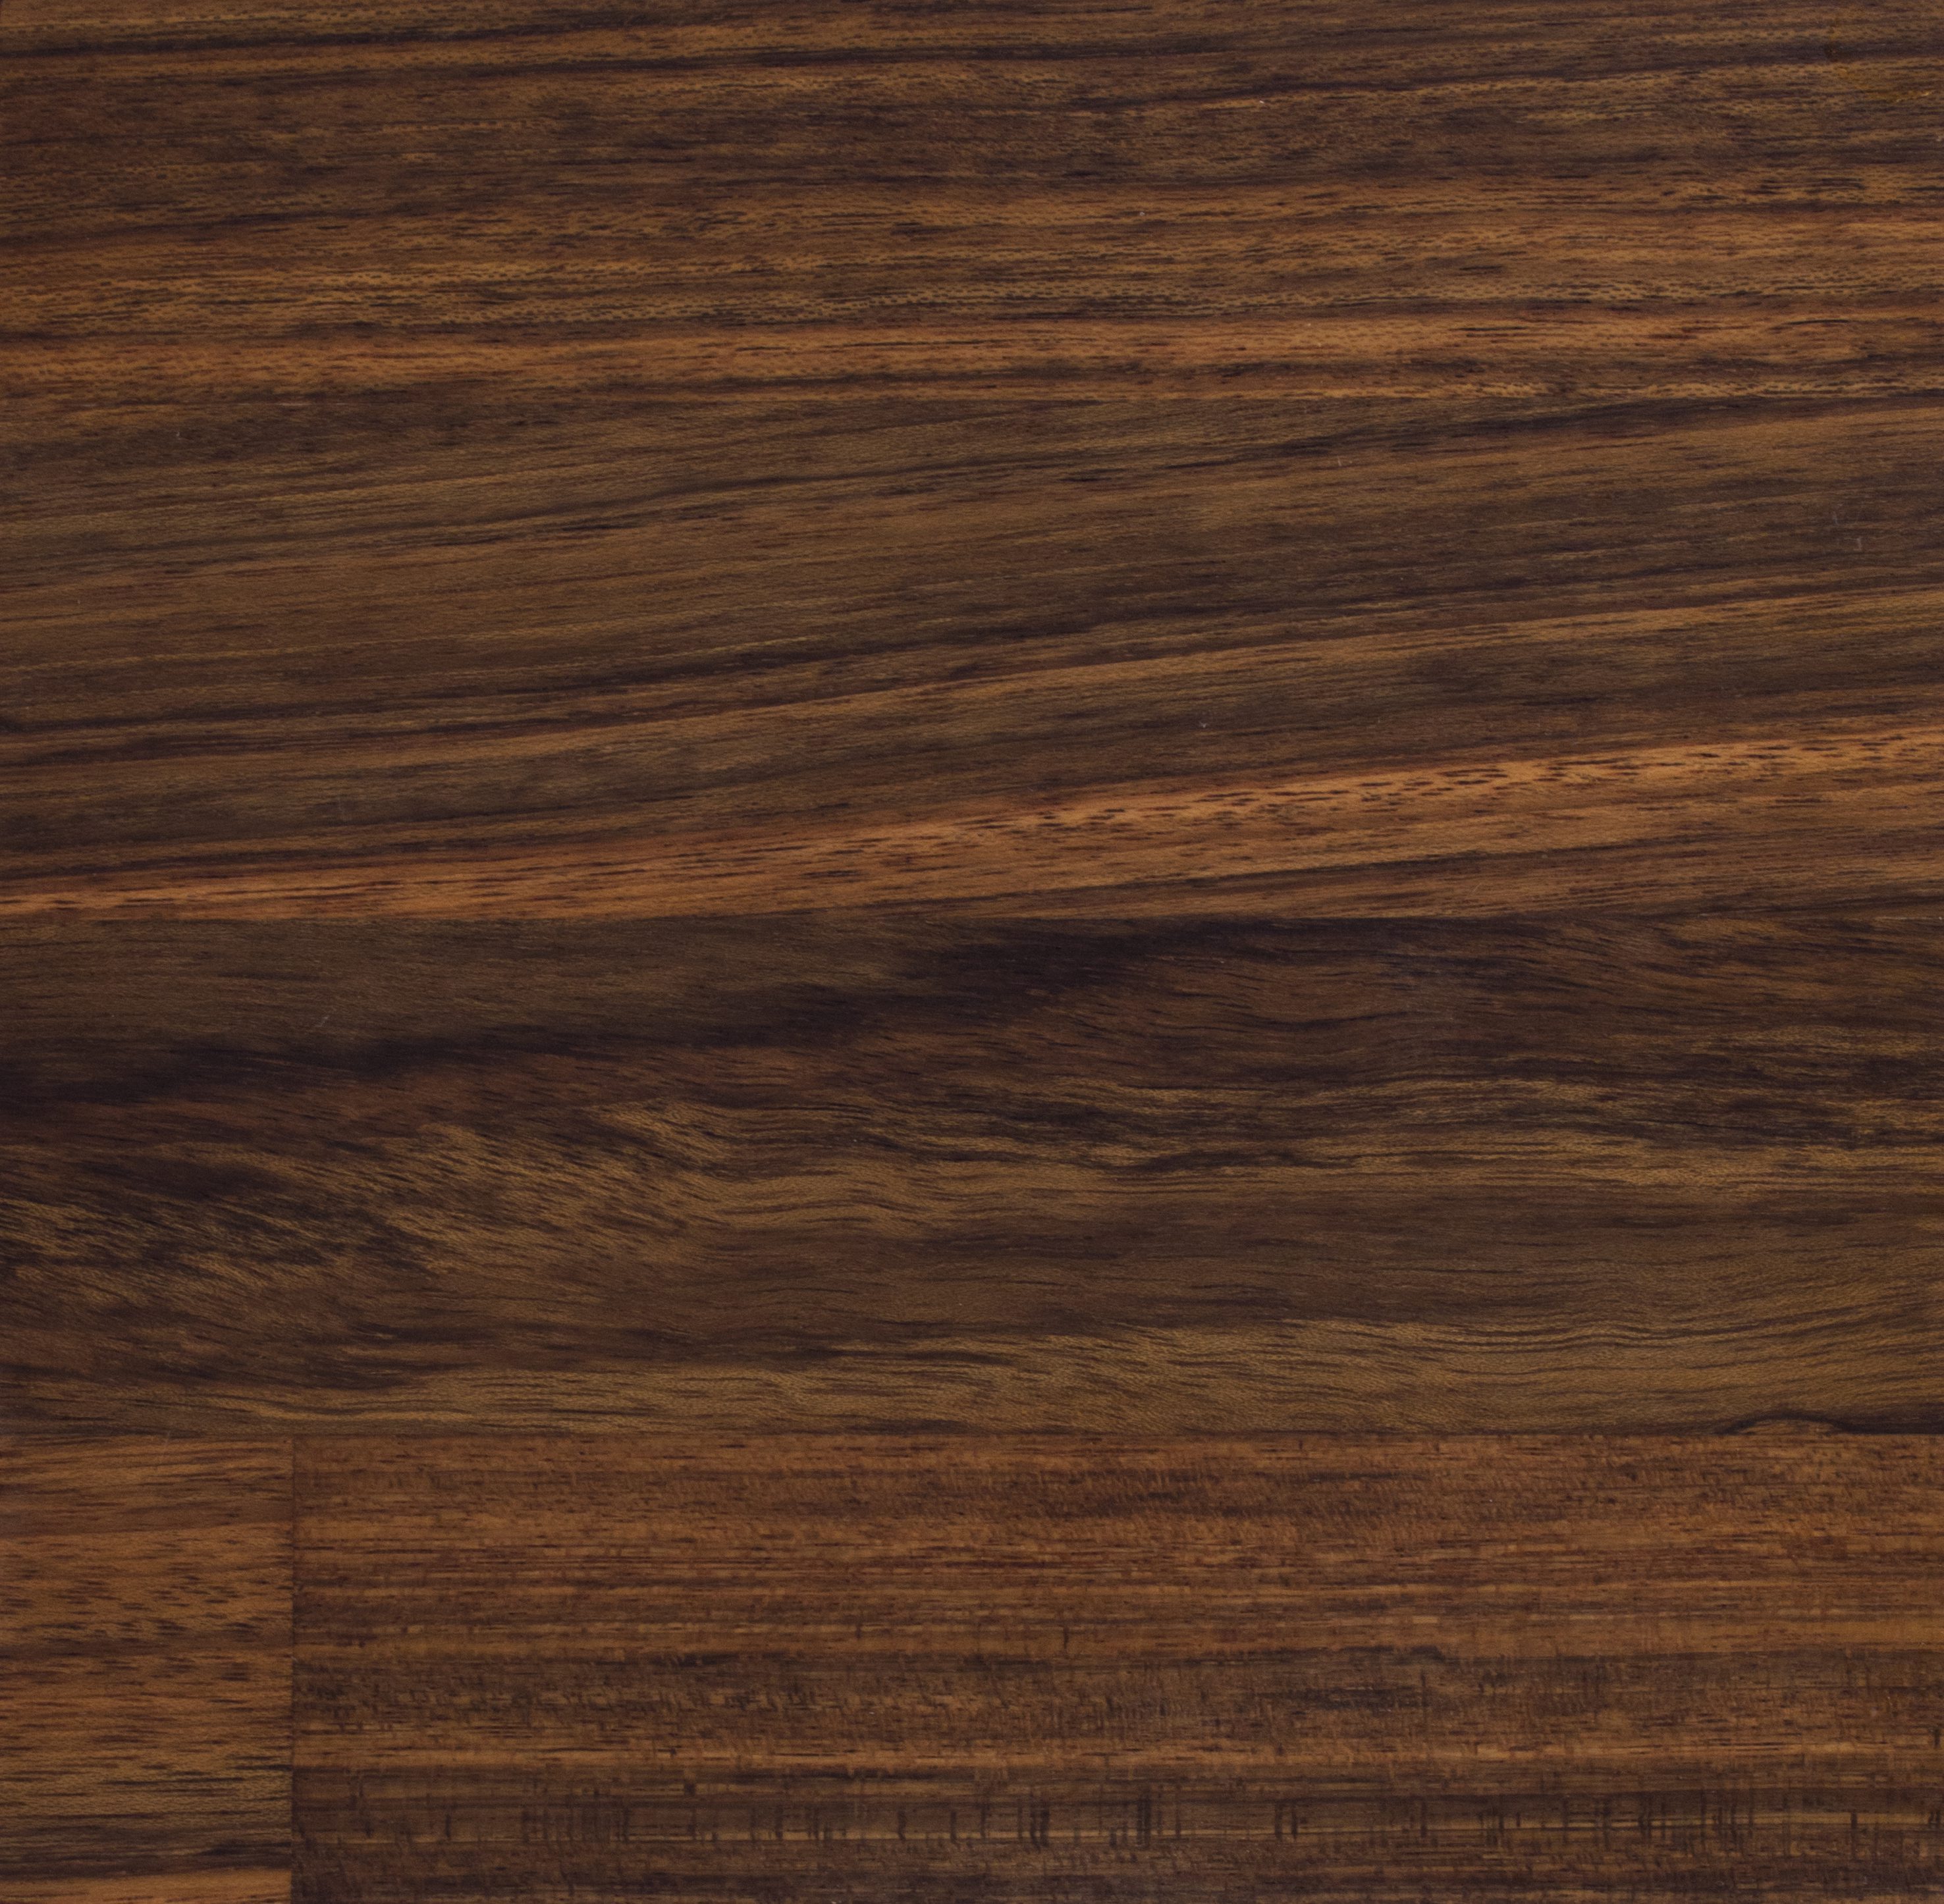 walnut hardwood flooring texture